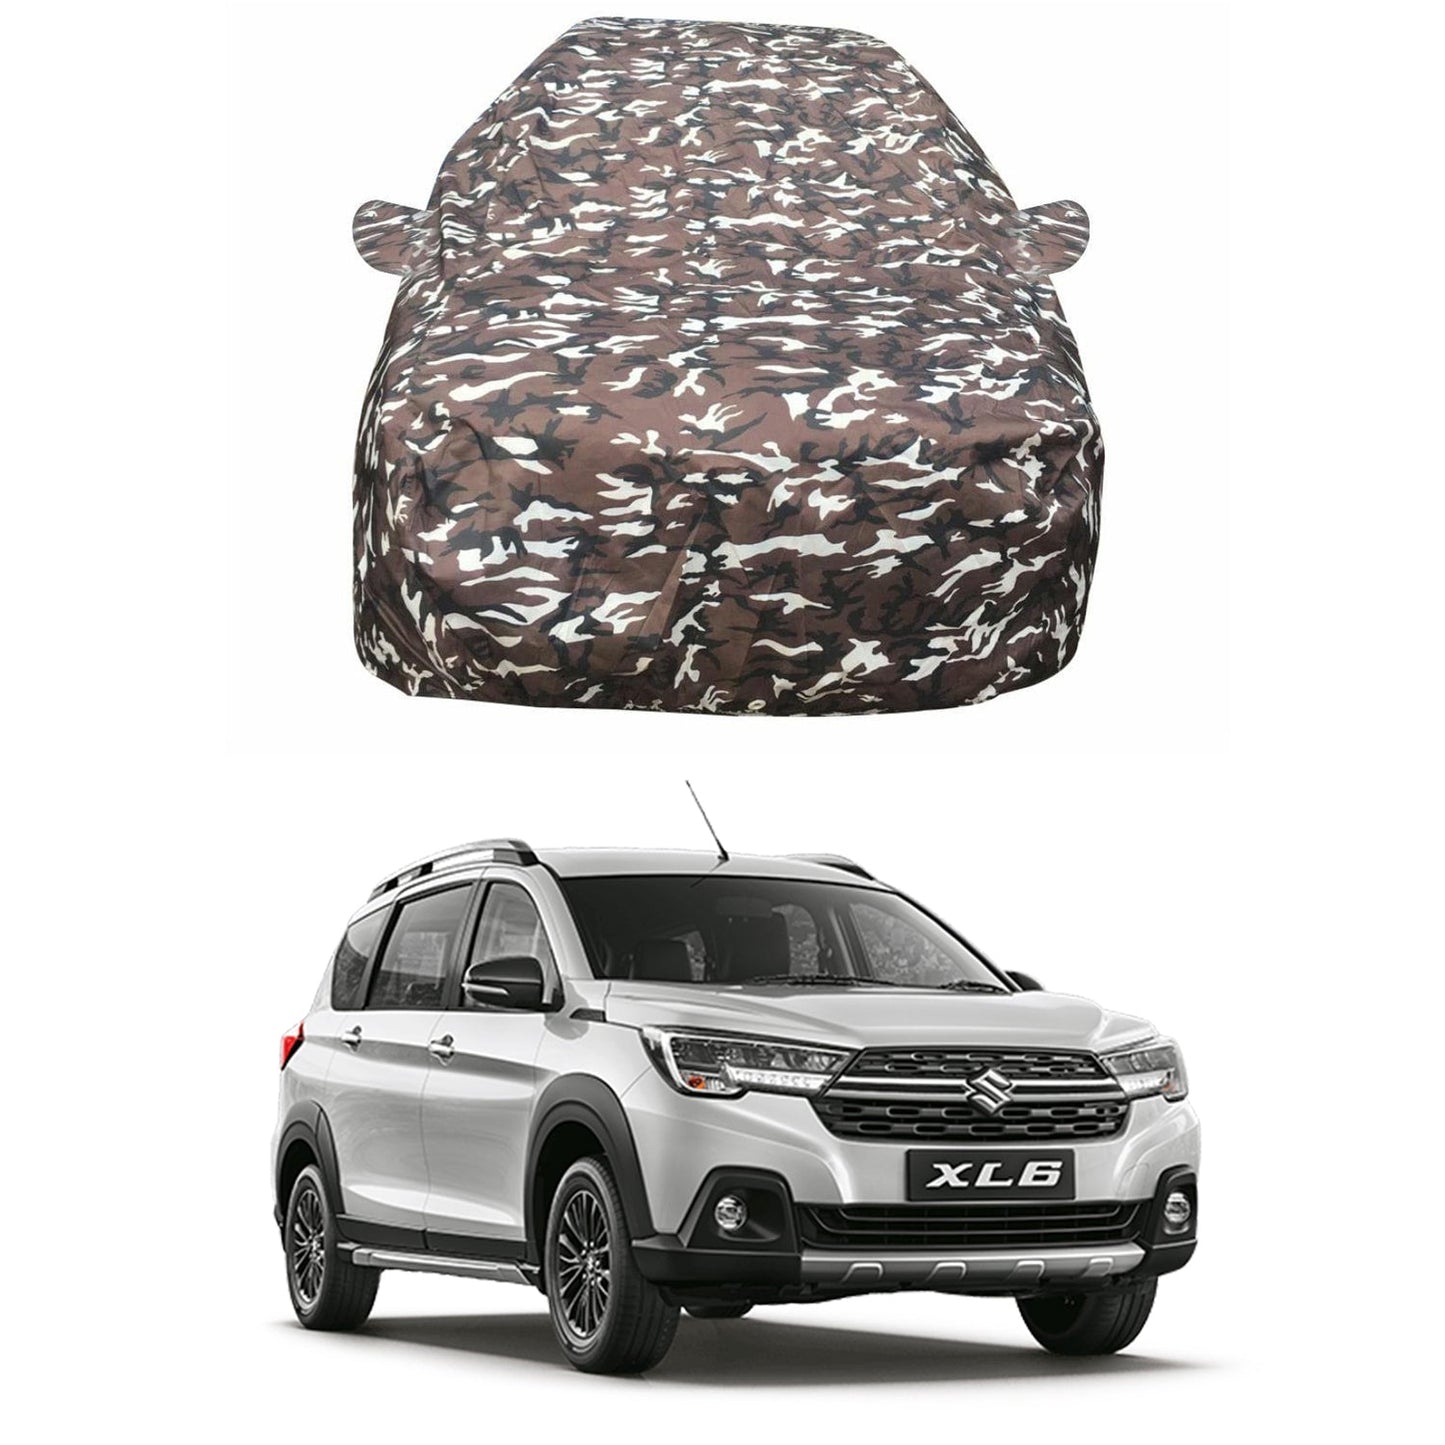 Oshotto Ranger Design Made of 100% Waterproof Car Body Cover with Mirror Pockets For Maruti Suzuki XL6